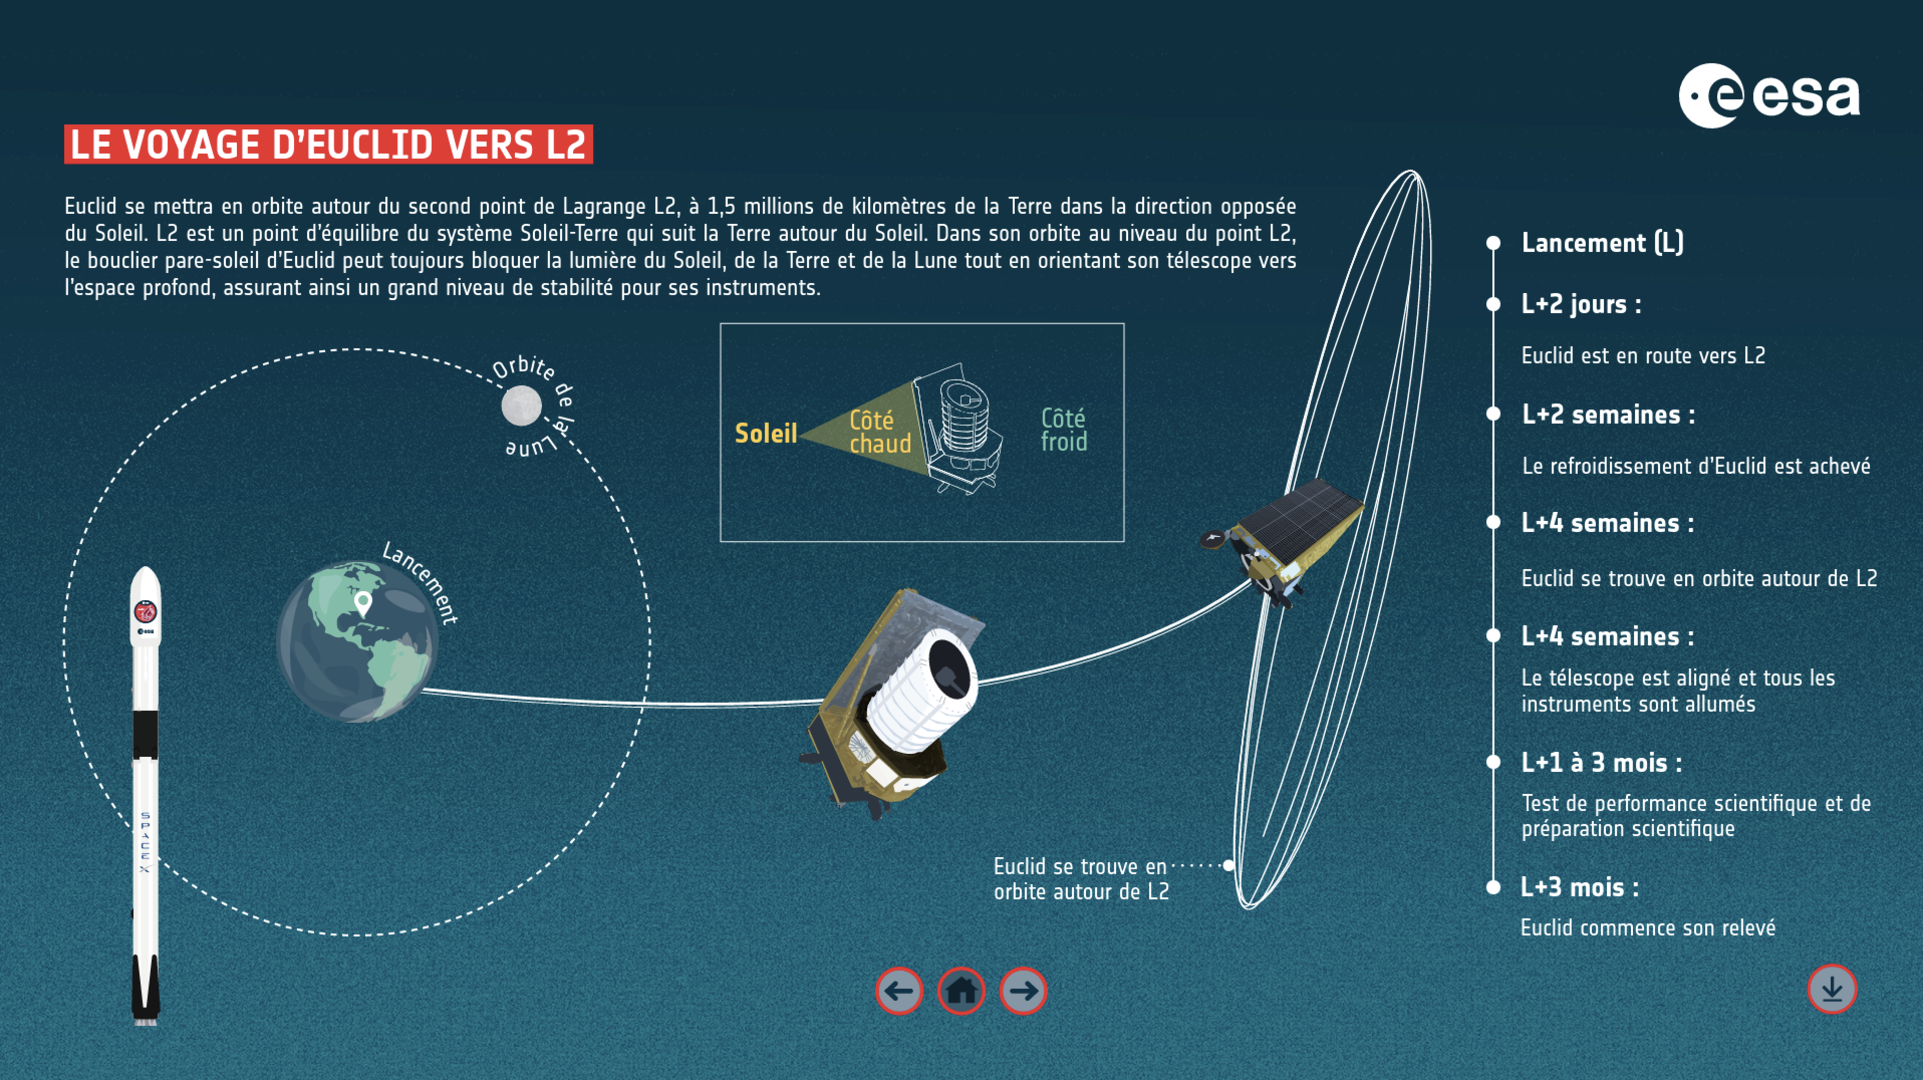 Euclid - Voyage vers L2 infographic